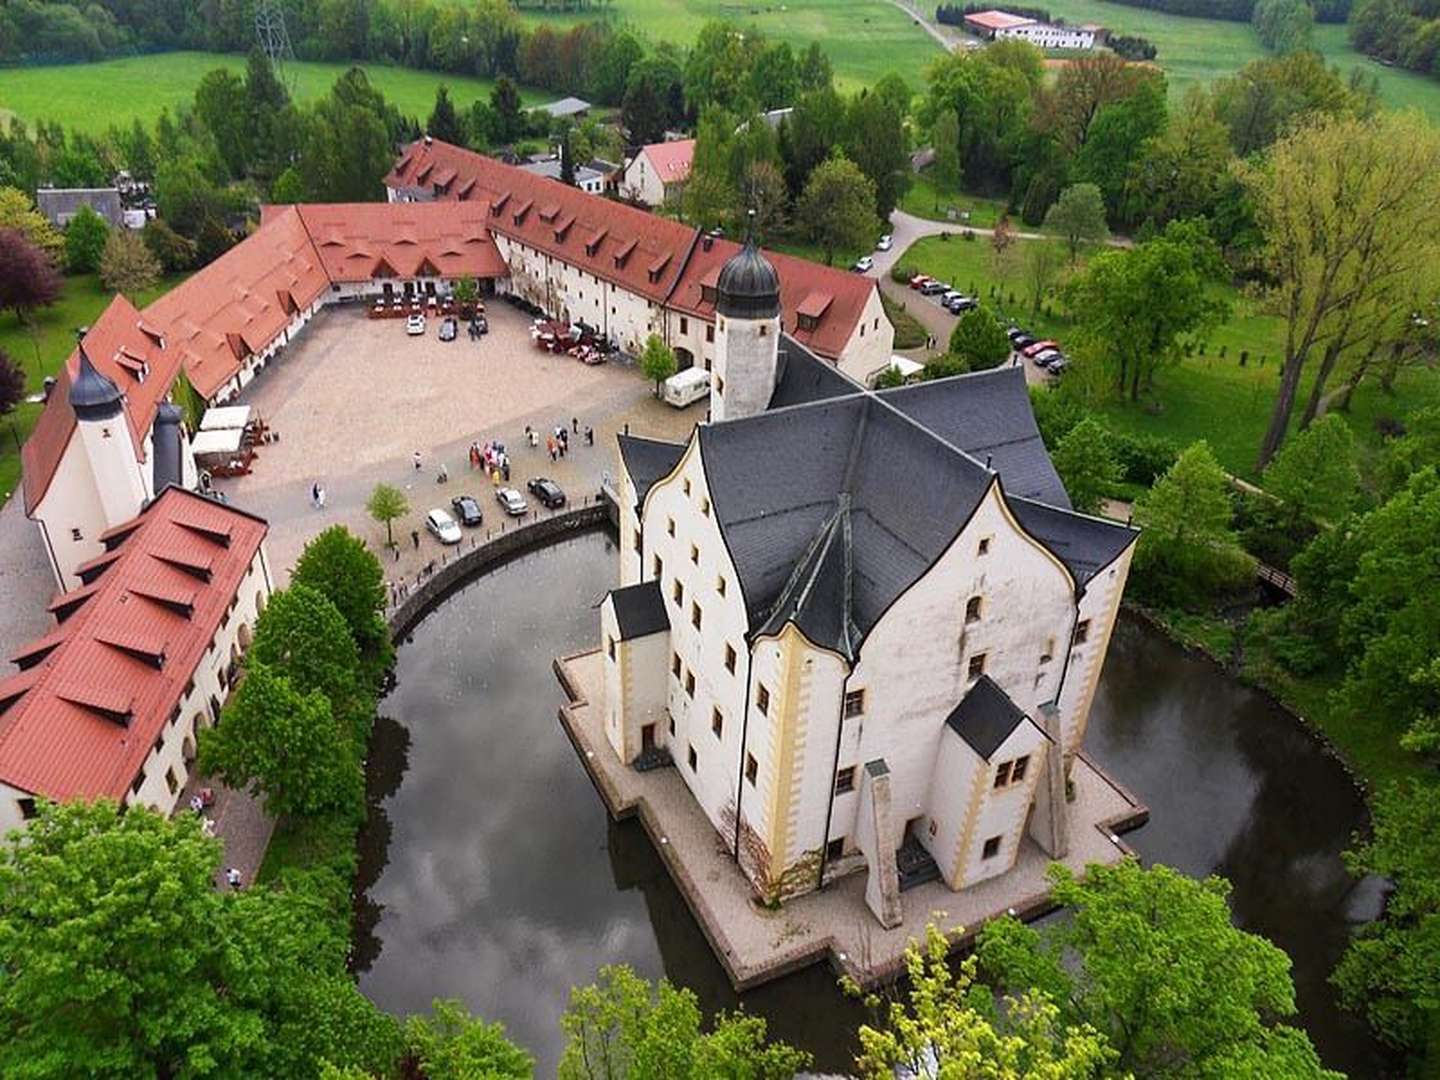 Romantische Kuscheltage am Renaissance-Schloss